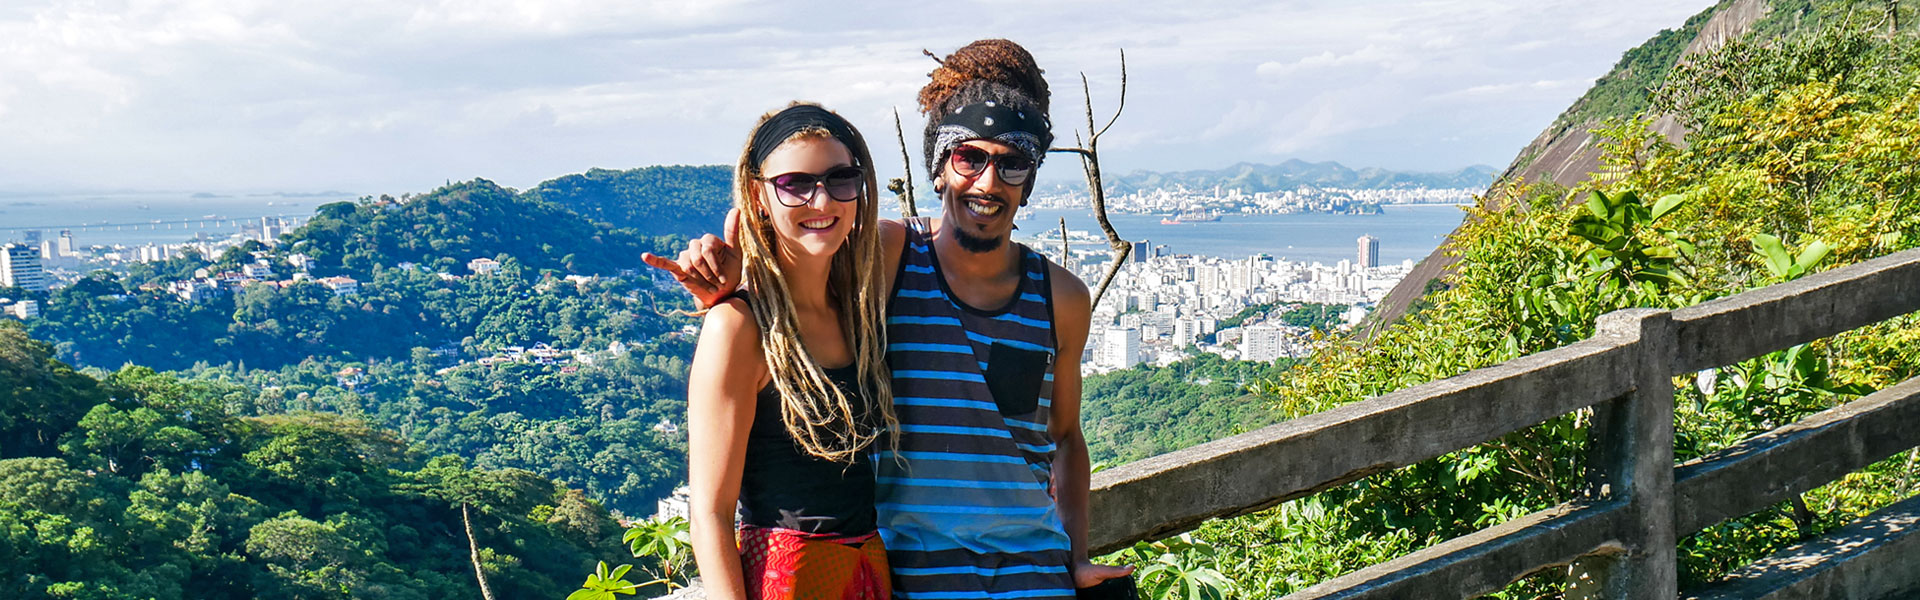 Rasta couple on Corcovado mountain in Tijuca Forest National Park overlooking Rio de Janeiro, Brazil